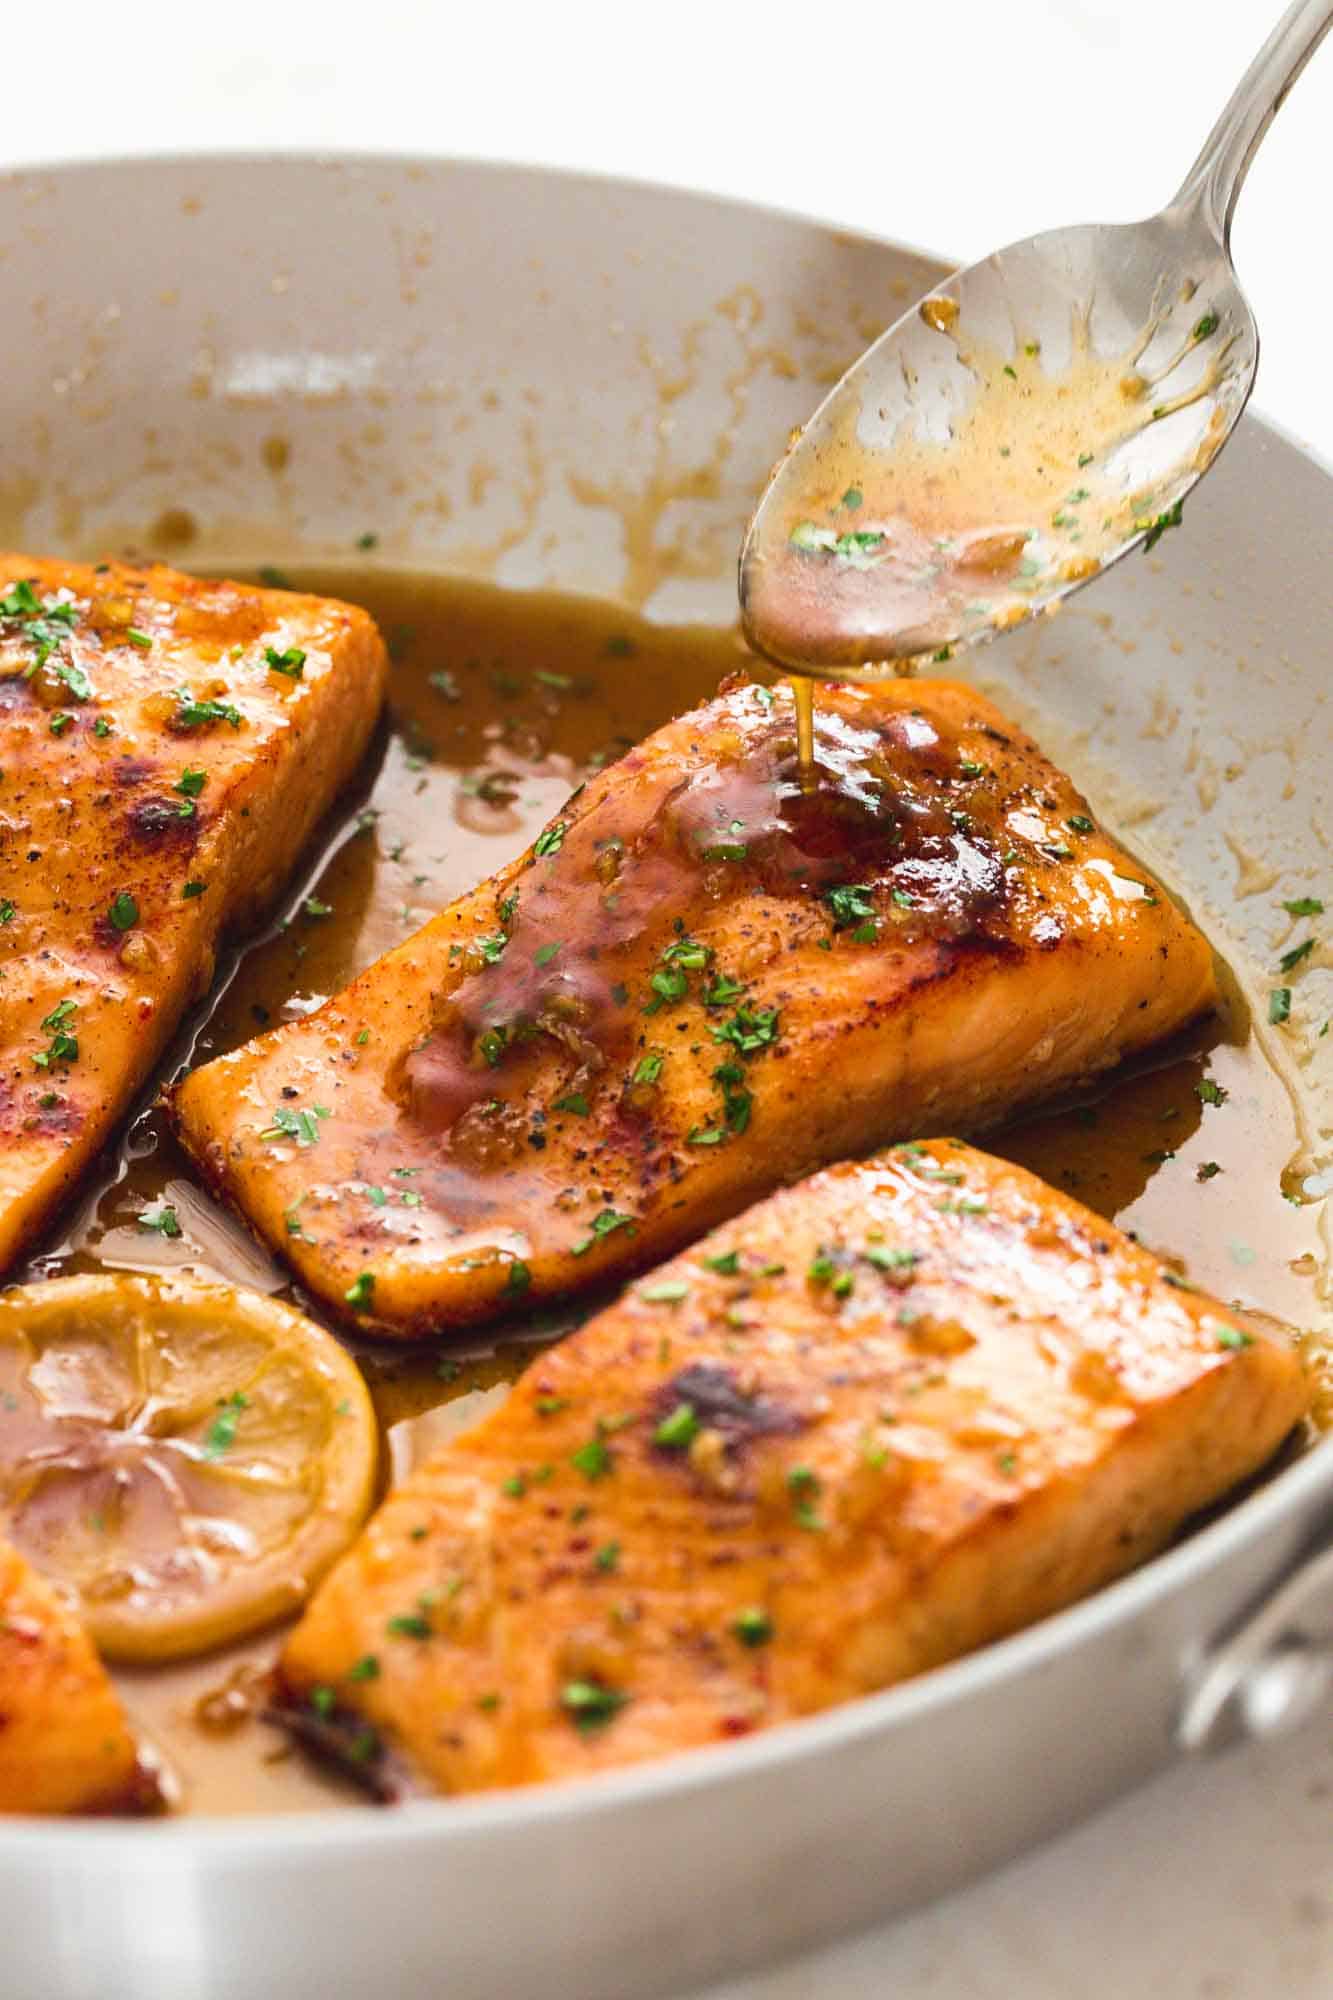 Spooning honey garlic sauce over salmon